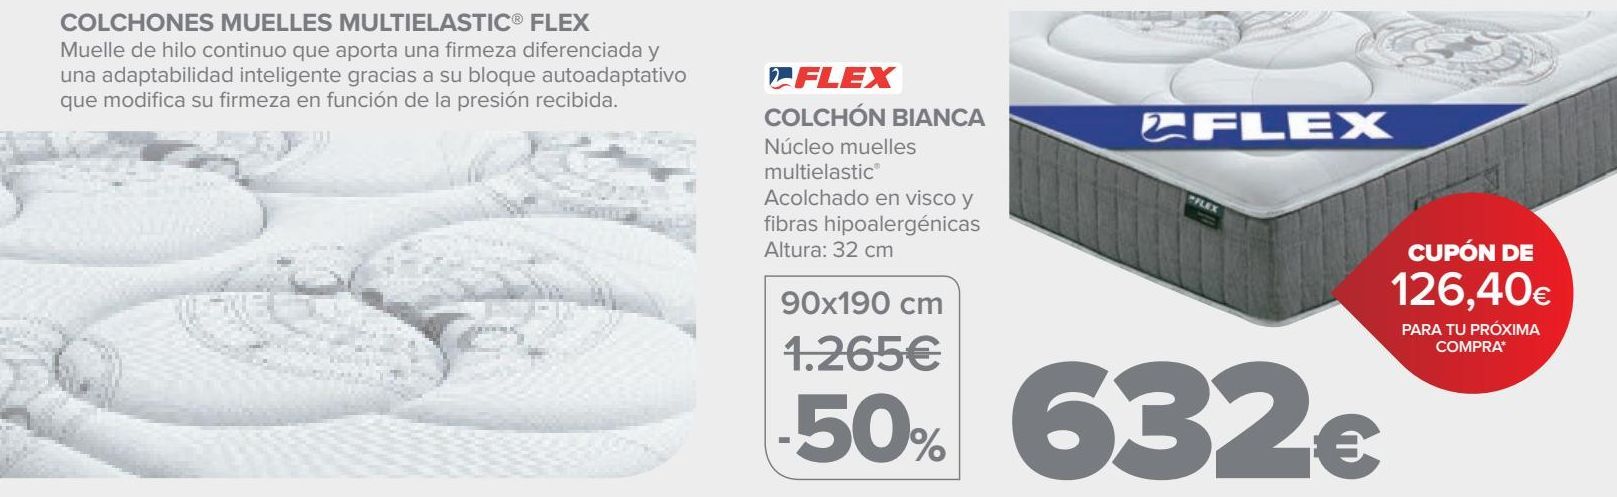 Oferta FLEX COLCHÓN BIANCA Carrefour